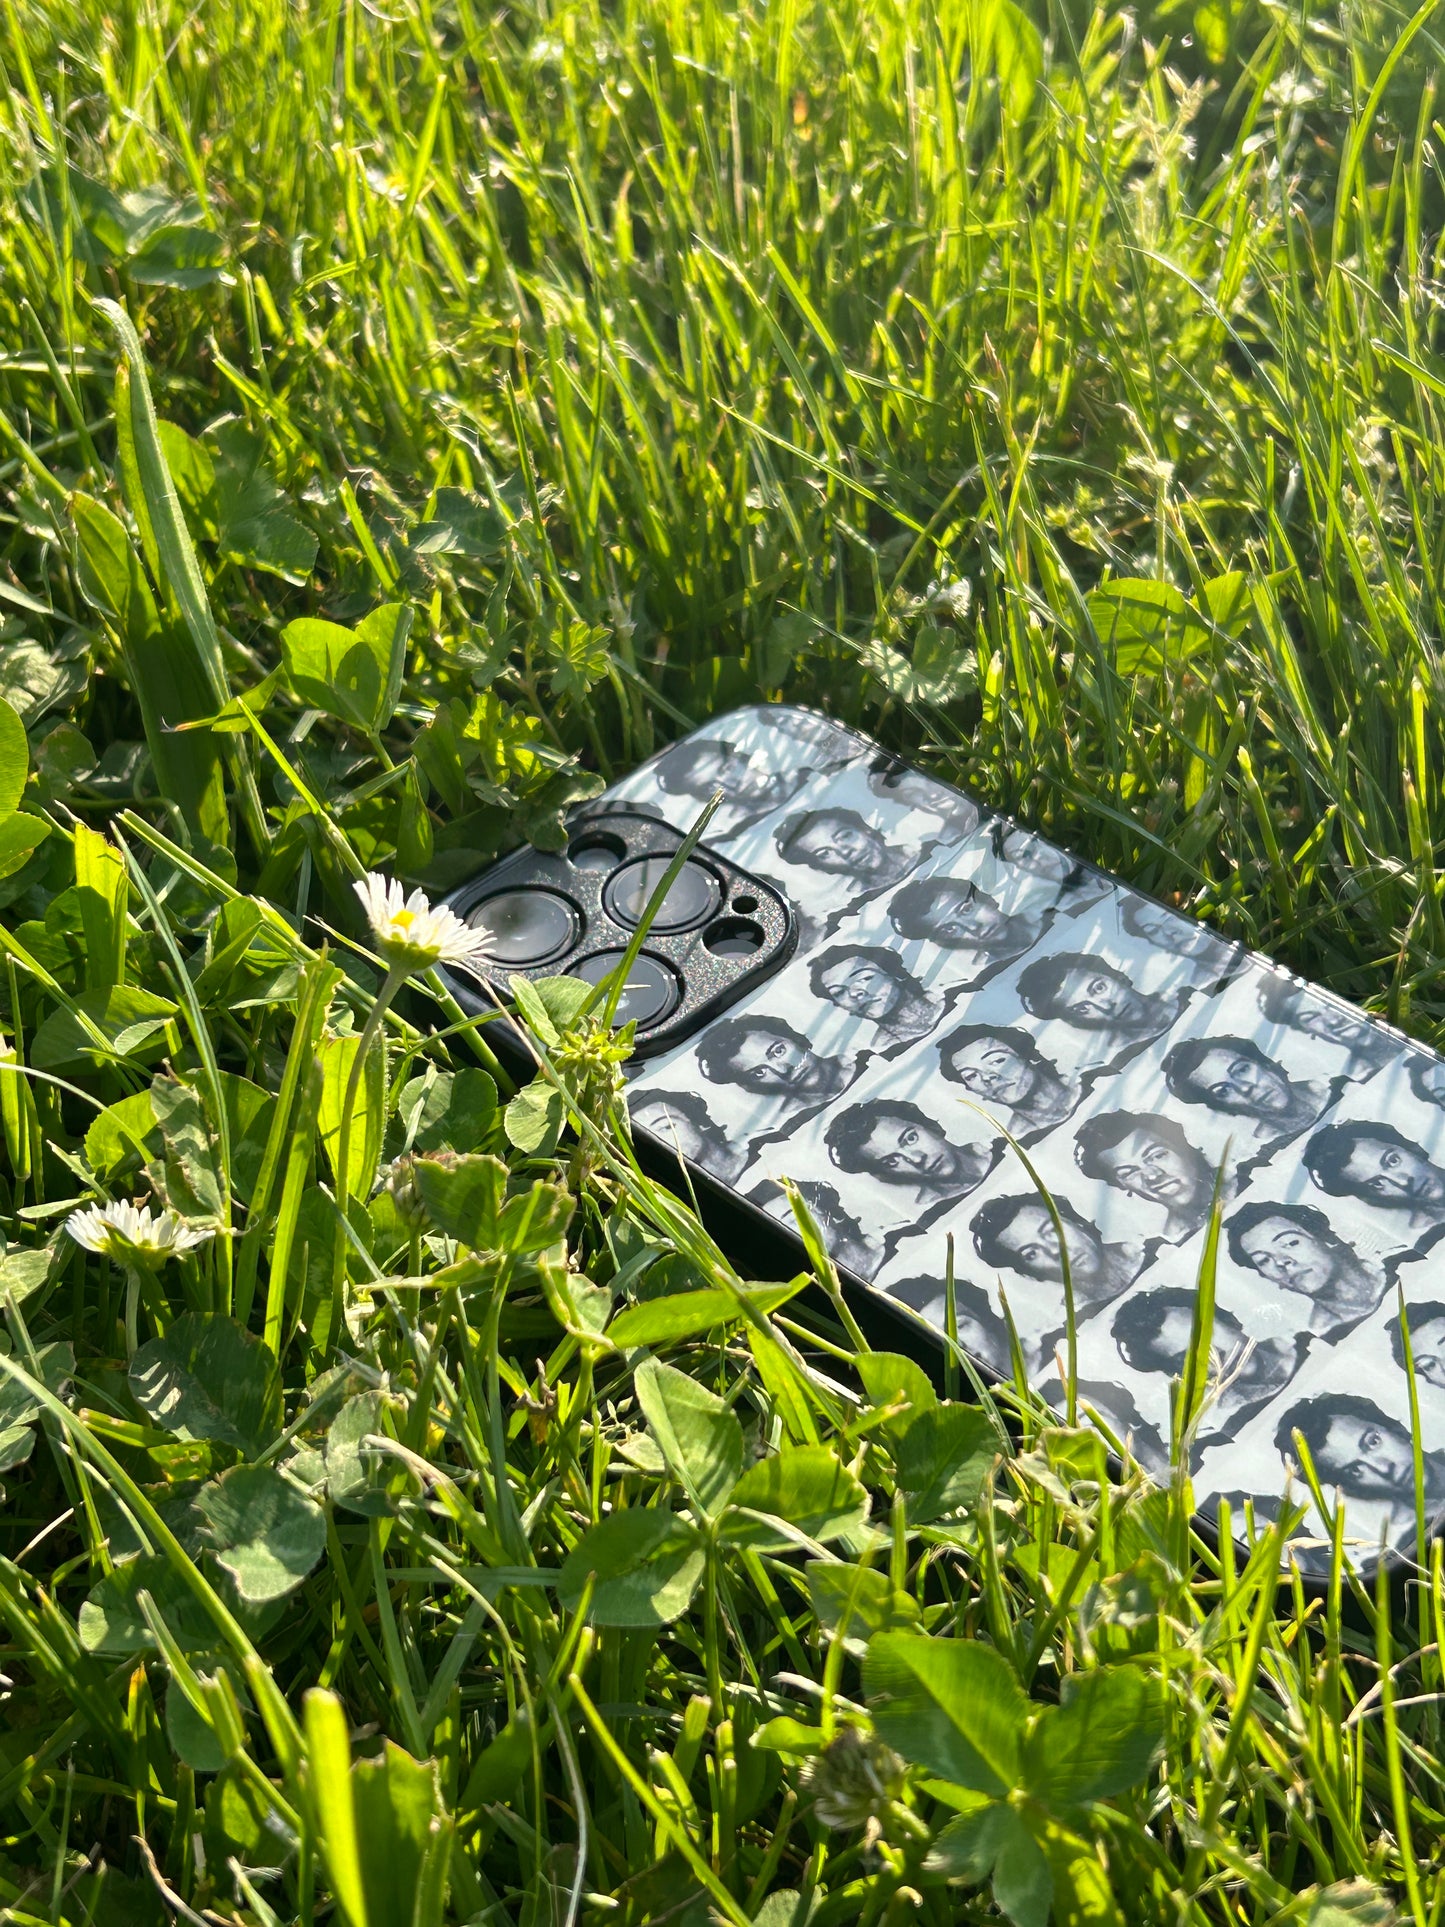 Harry Styles Polaroids Glass Phone Case